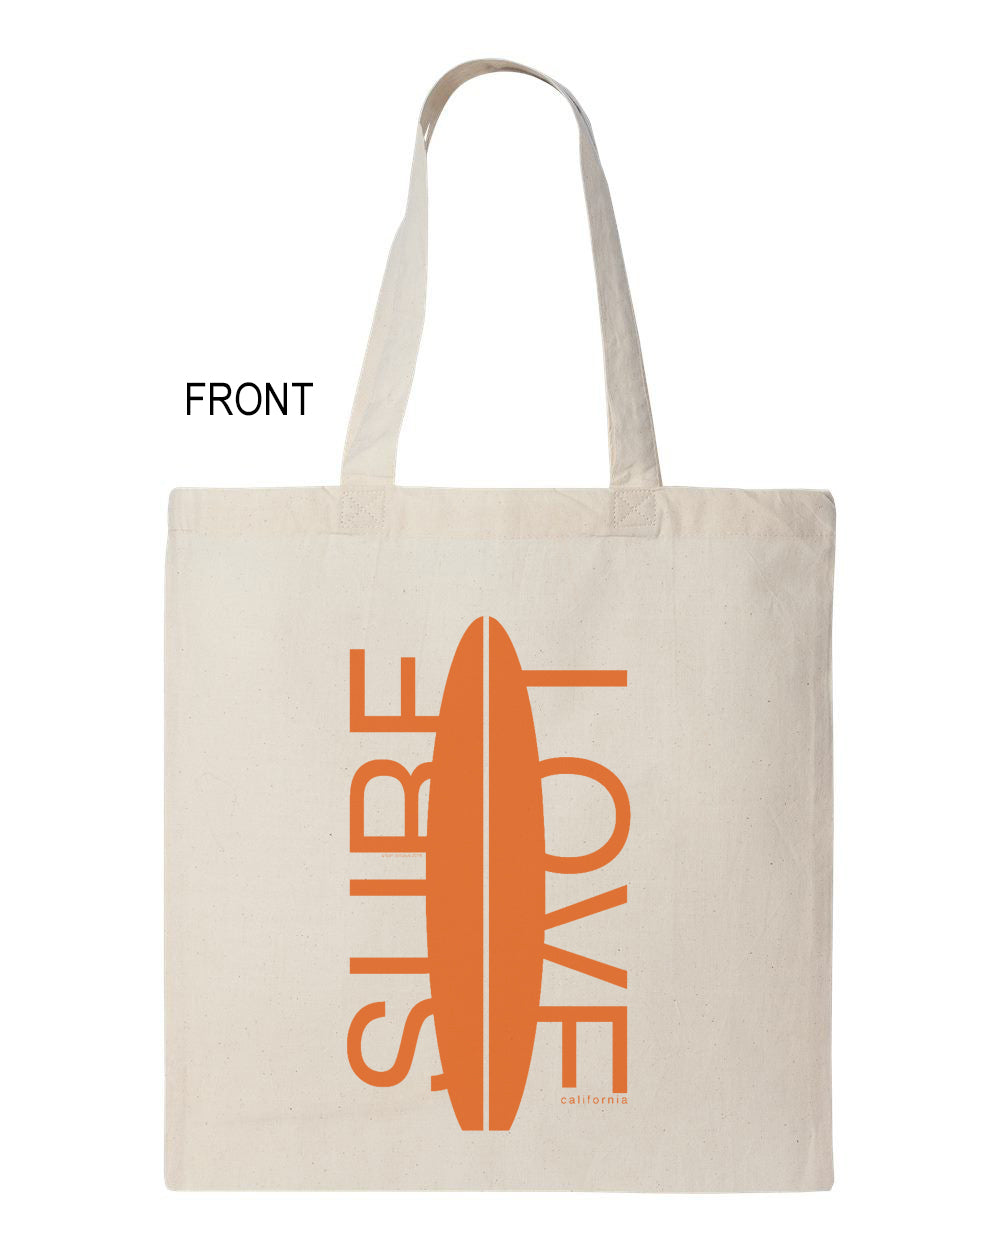 "SURF LOVE" Tote canvas bag